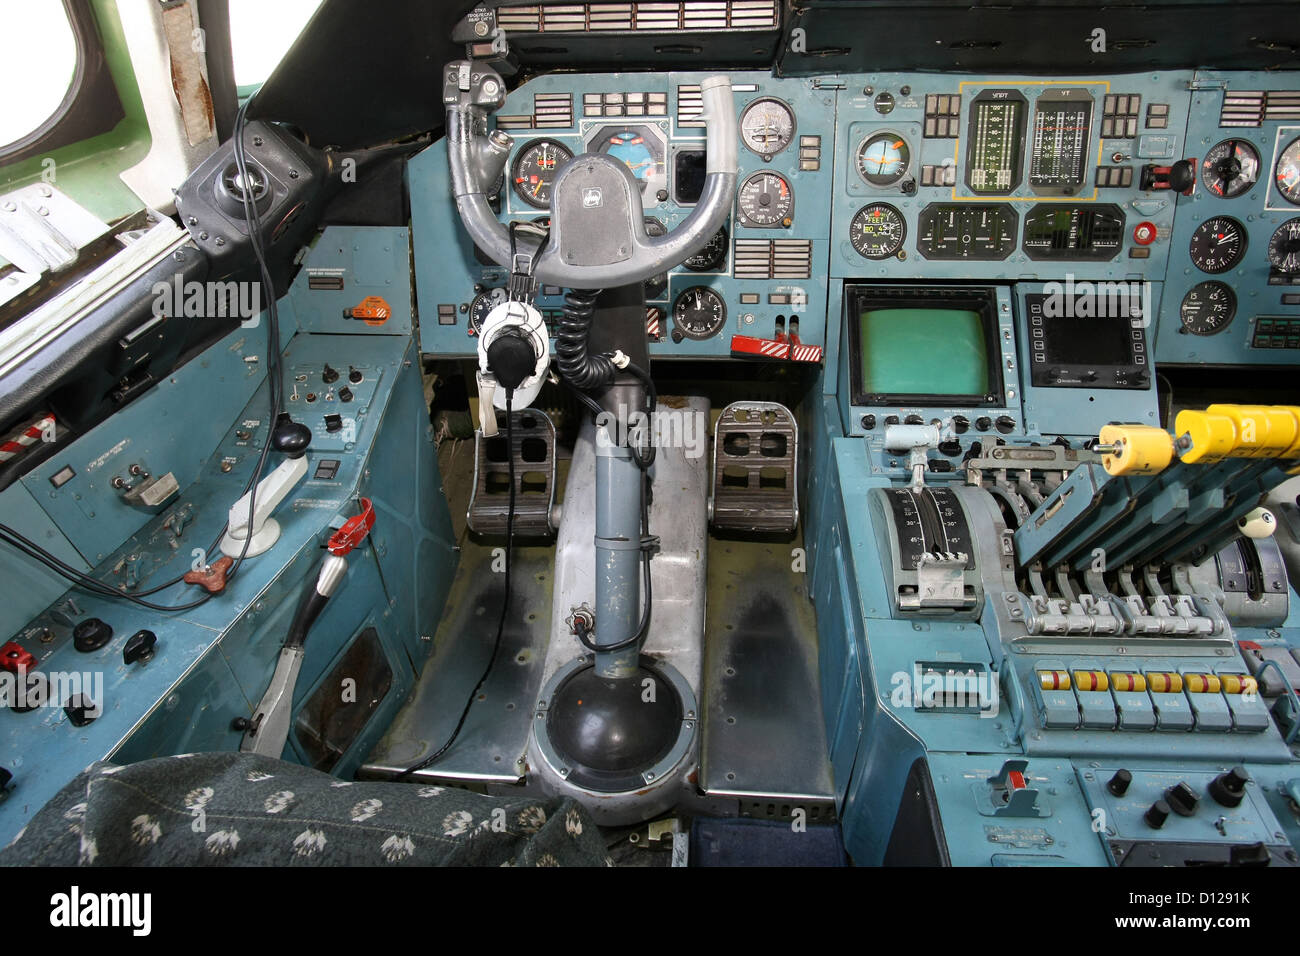 Antonov 225 High Resolution Stock Photography and Images - Alamy